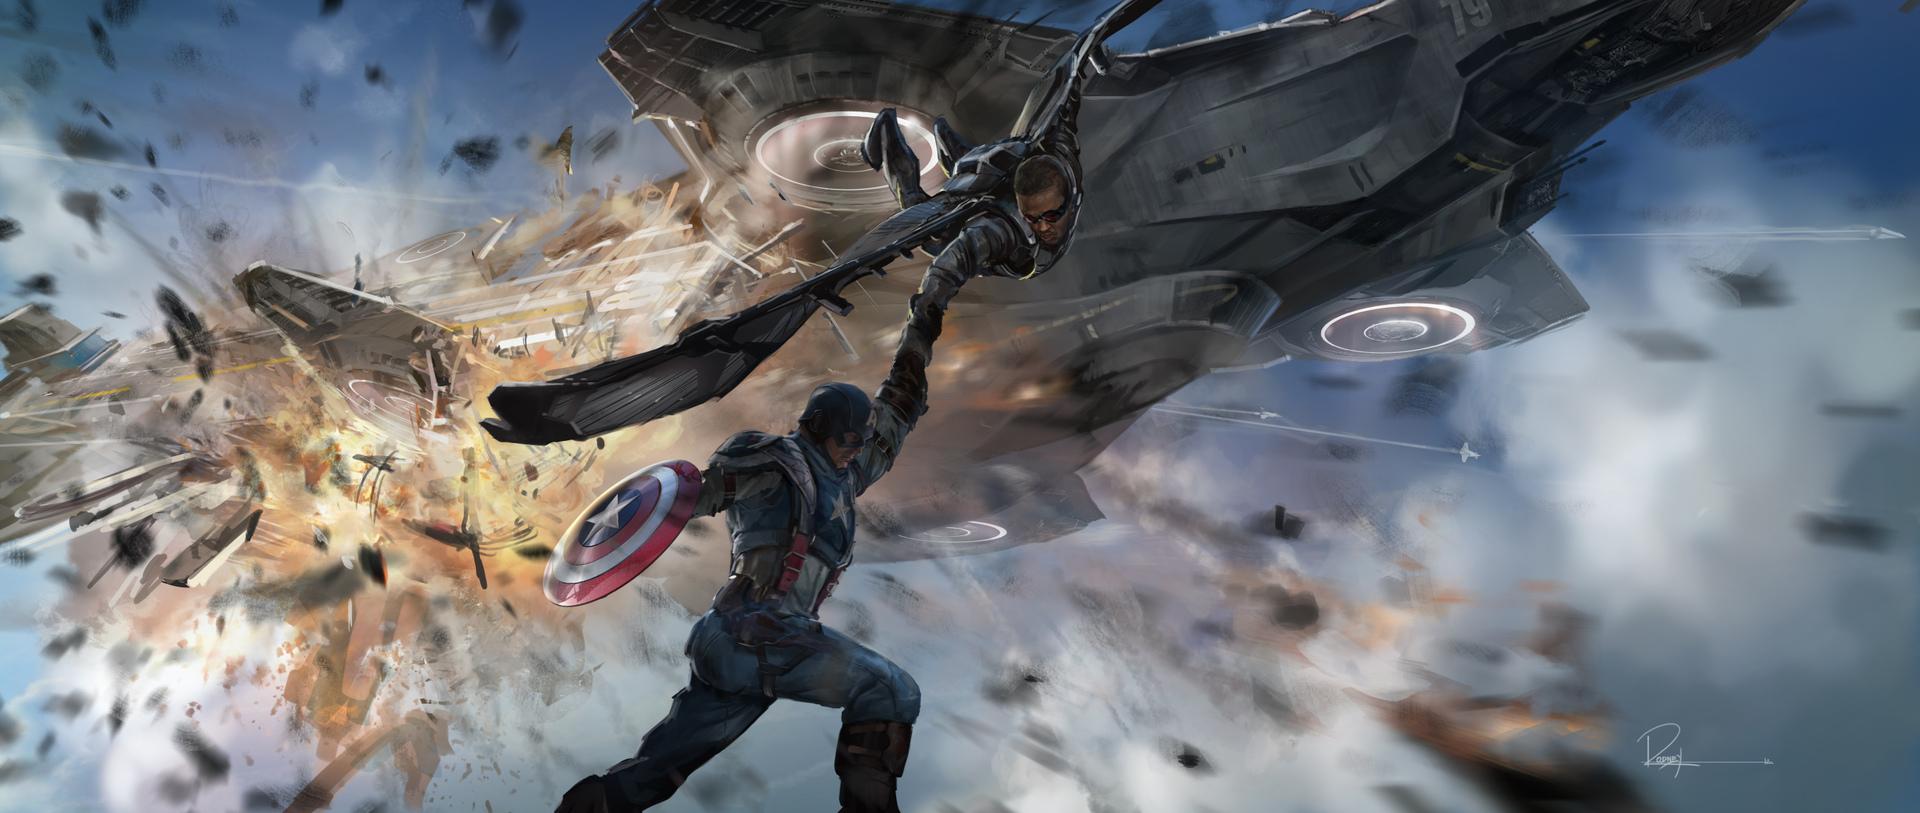 Captain America: The Winter Soldier' Concept Art